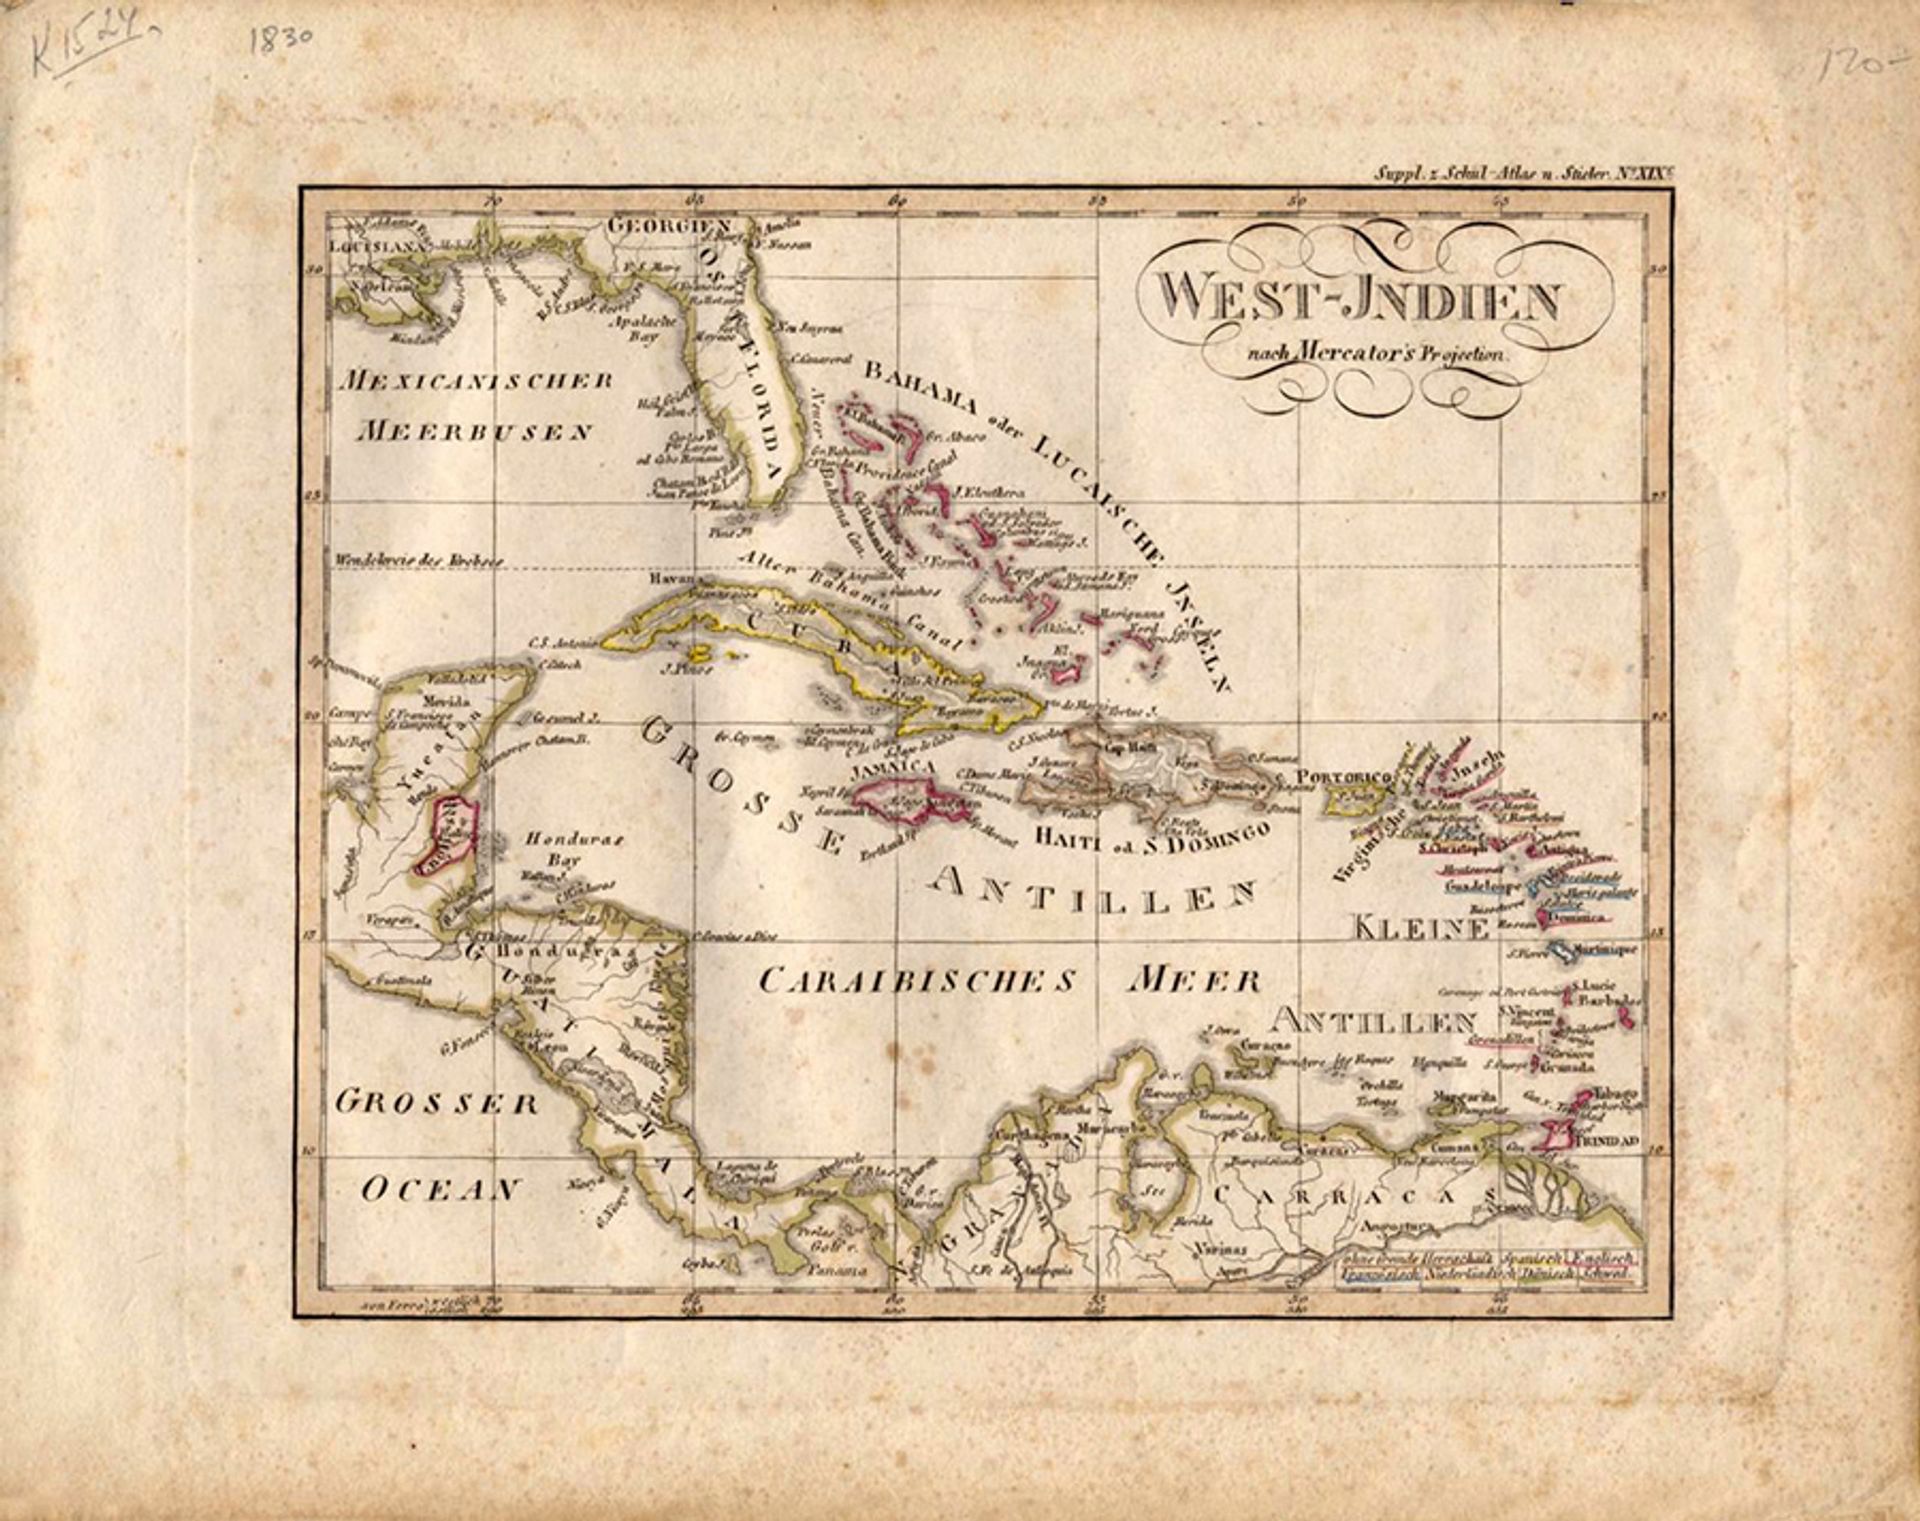 An archival map of the Caribbean by Adolf Steiler from the Colección Cartográfica del Centro León 